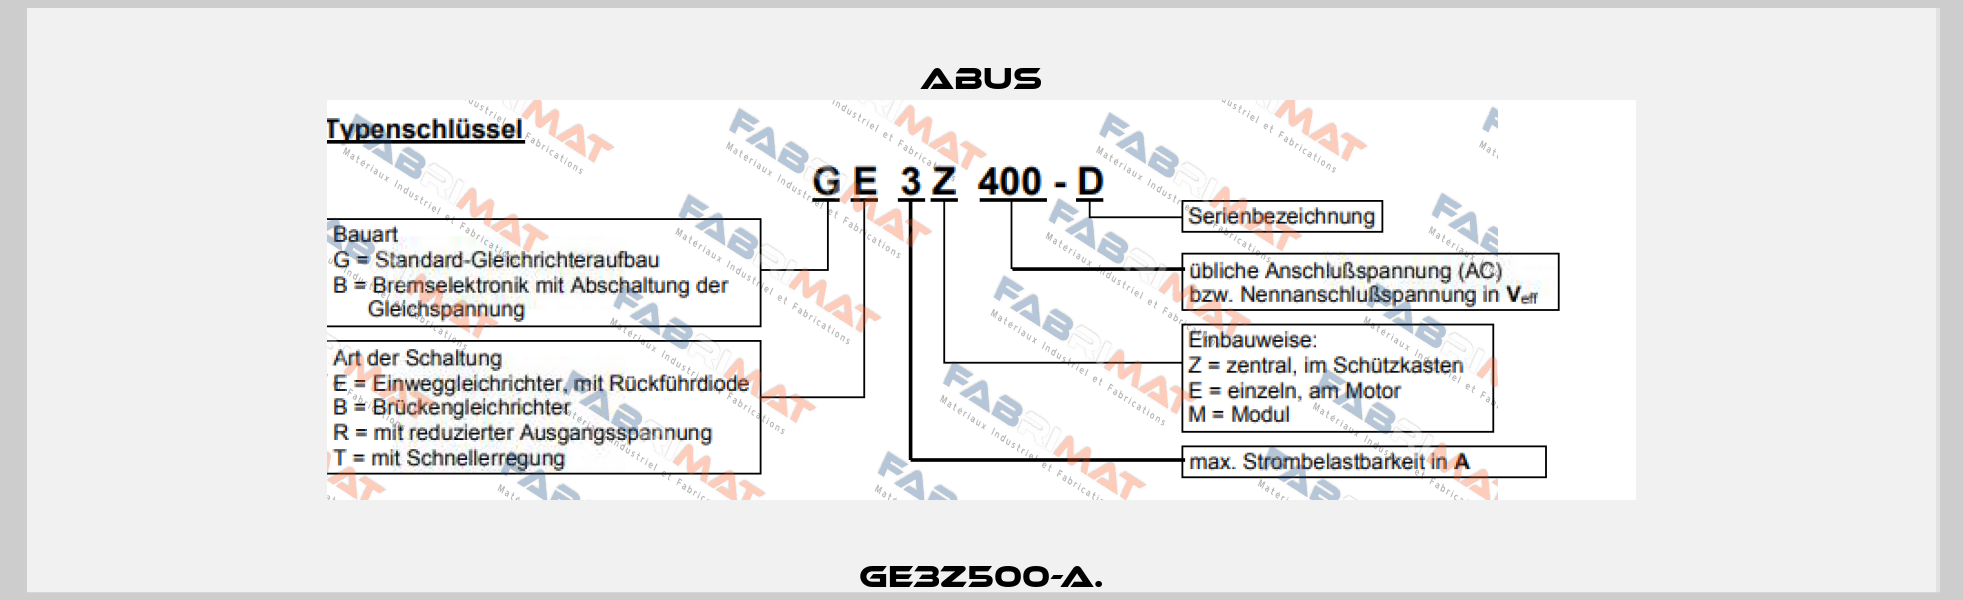 GE3Z500-A. Abus